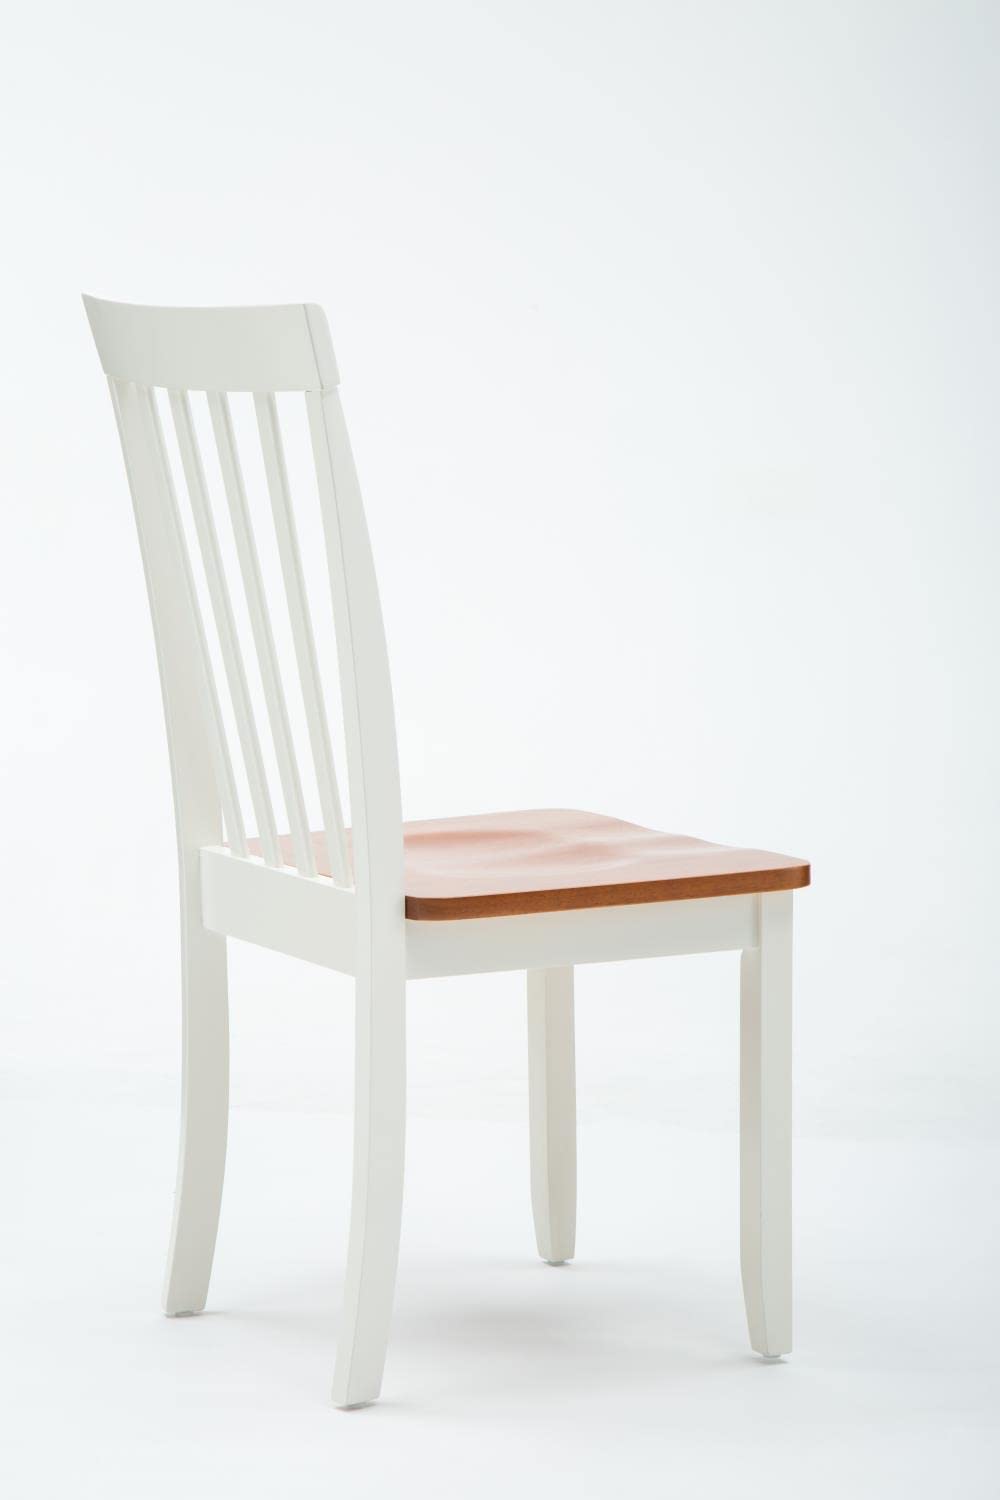 Boraam Bloomington Dining Chair, White/Honey Oak, Set of 2